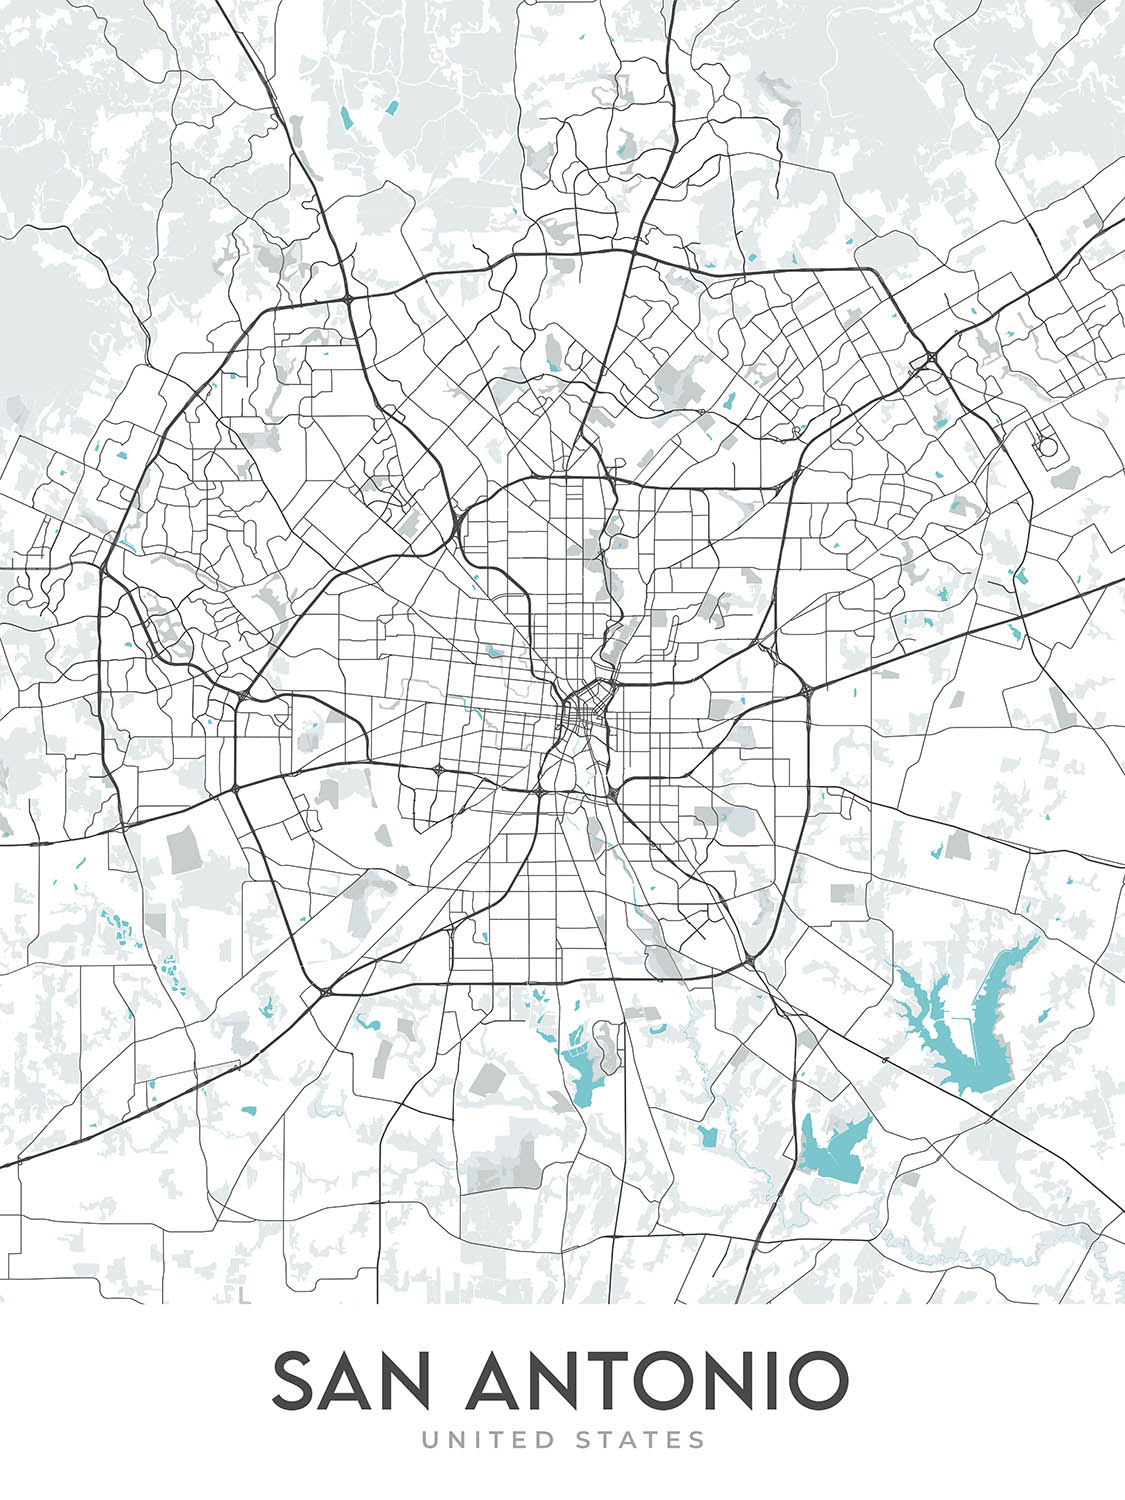 Moderner Stadtplan von San Antonio, TX: Alamo, River Walk, AT&T Center, Downtown, I-35